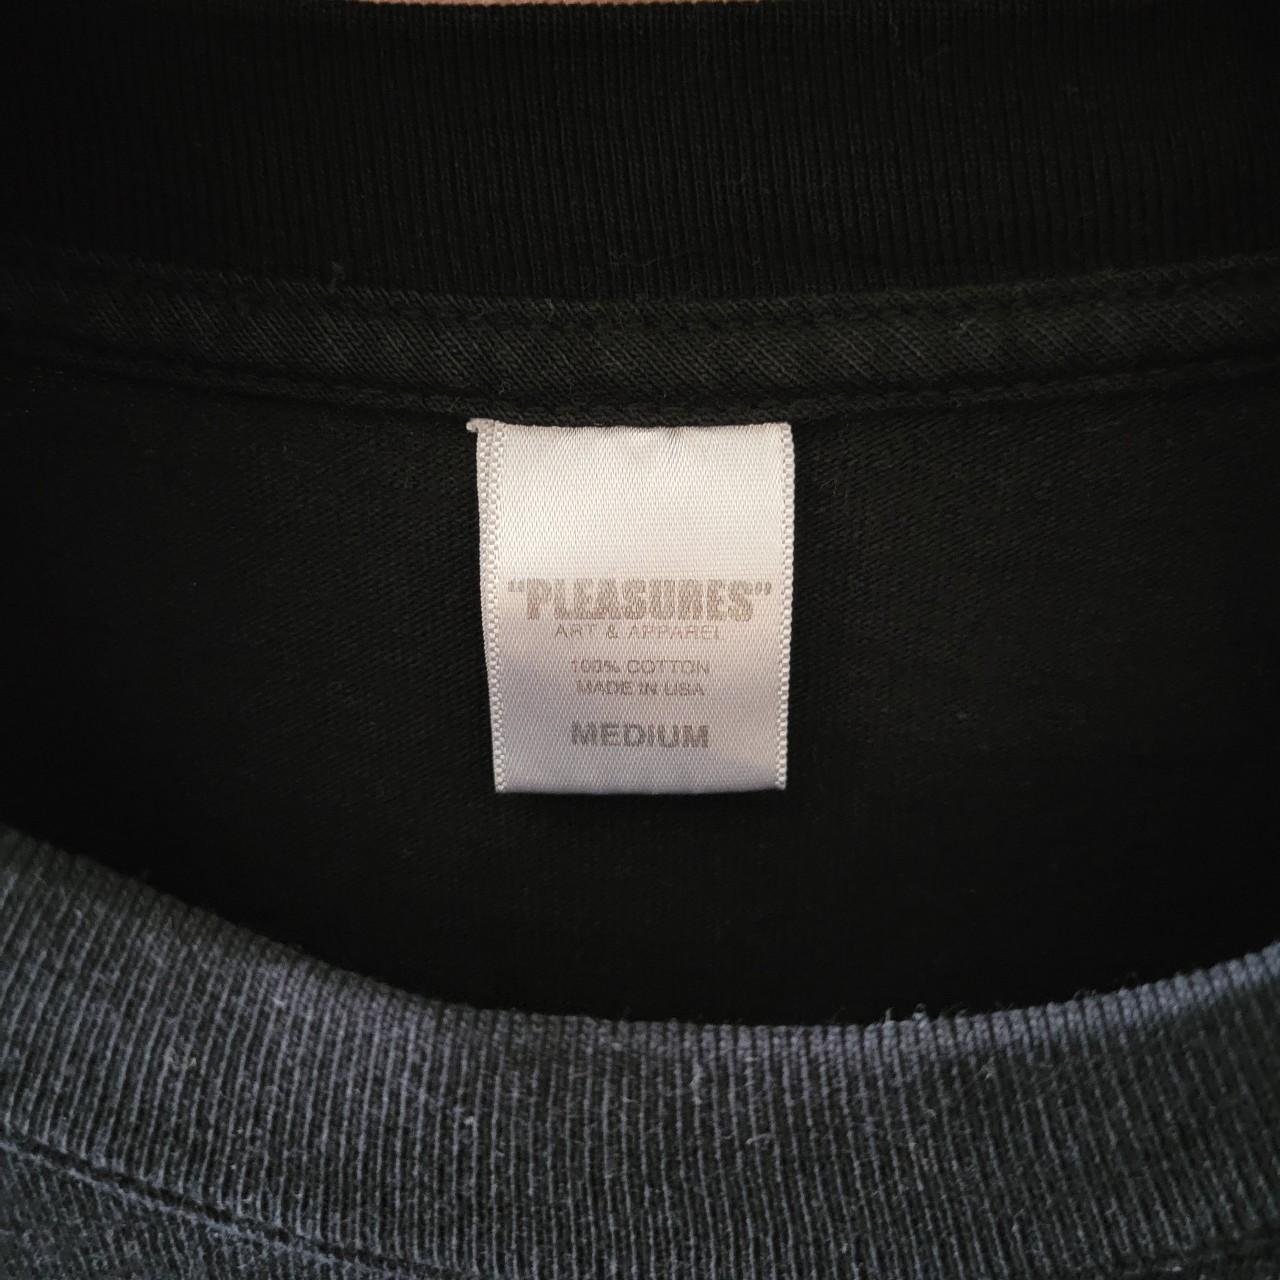 Product Image 2 - Pleasures isolation t shirt
Black
Tagged Medium,